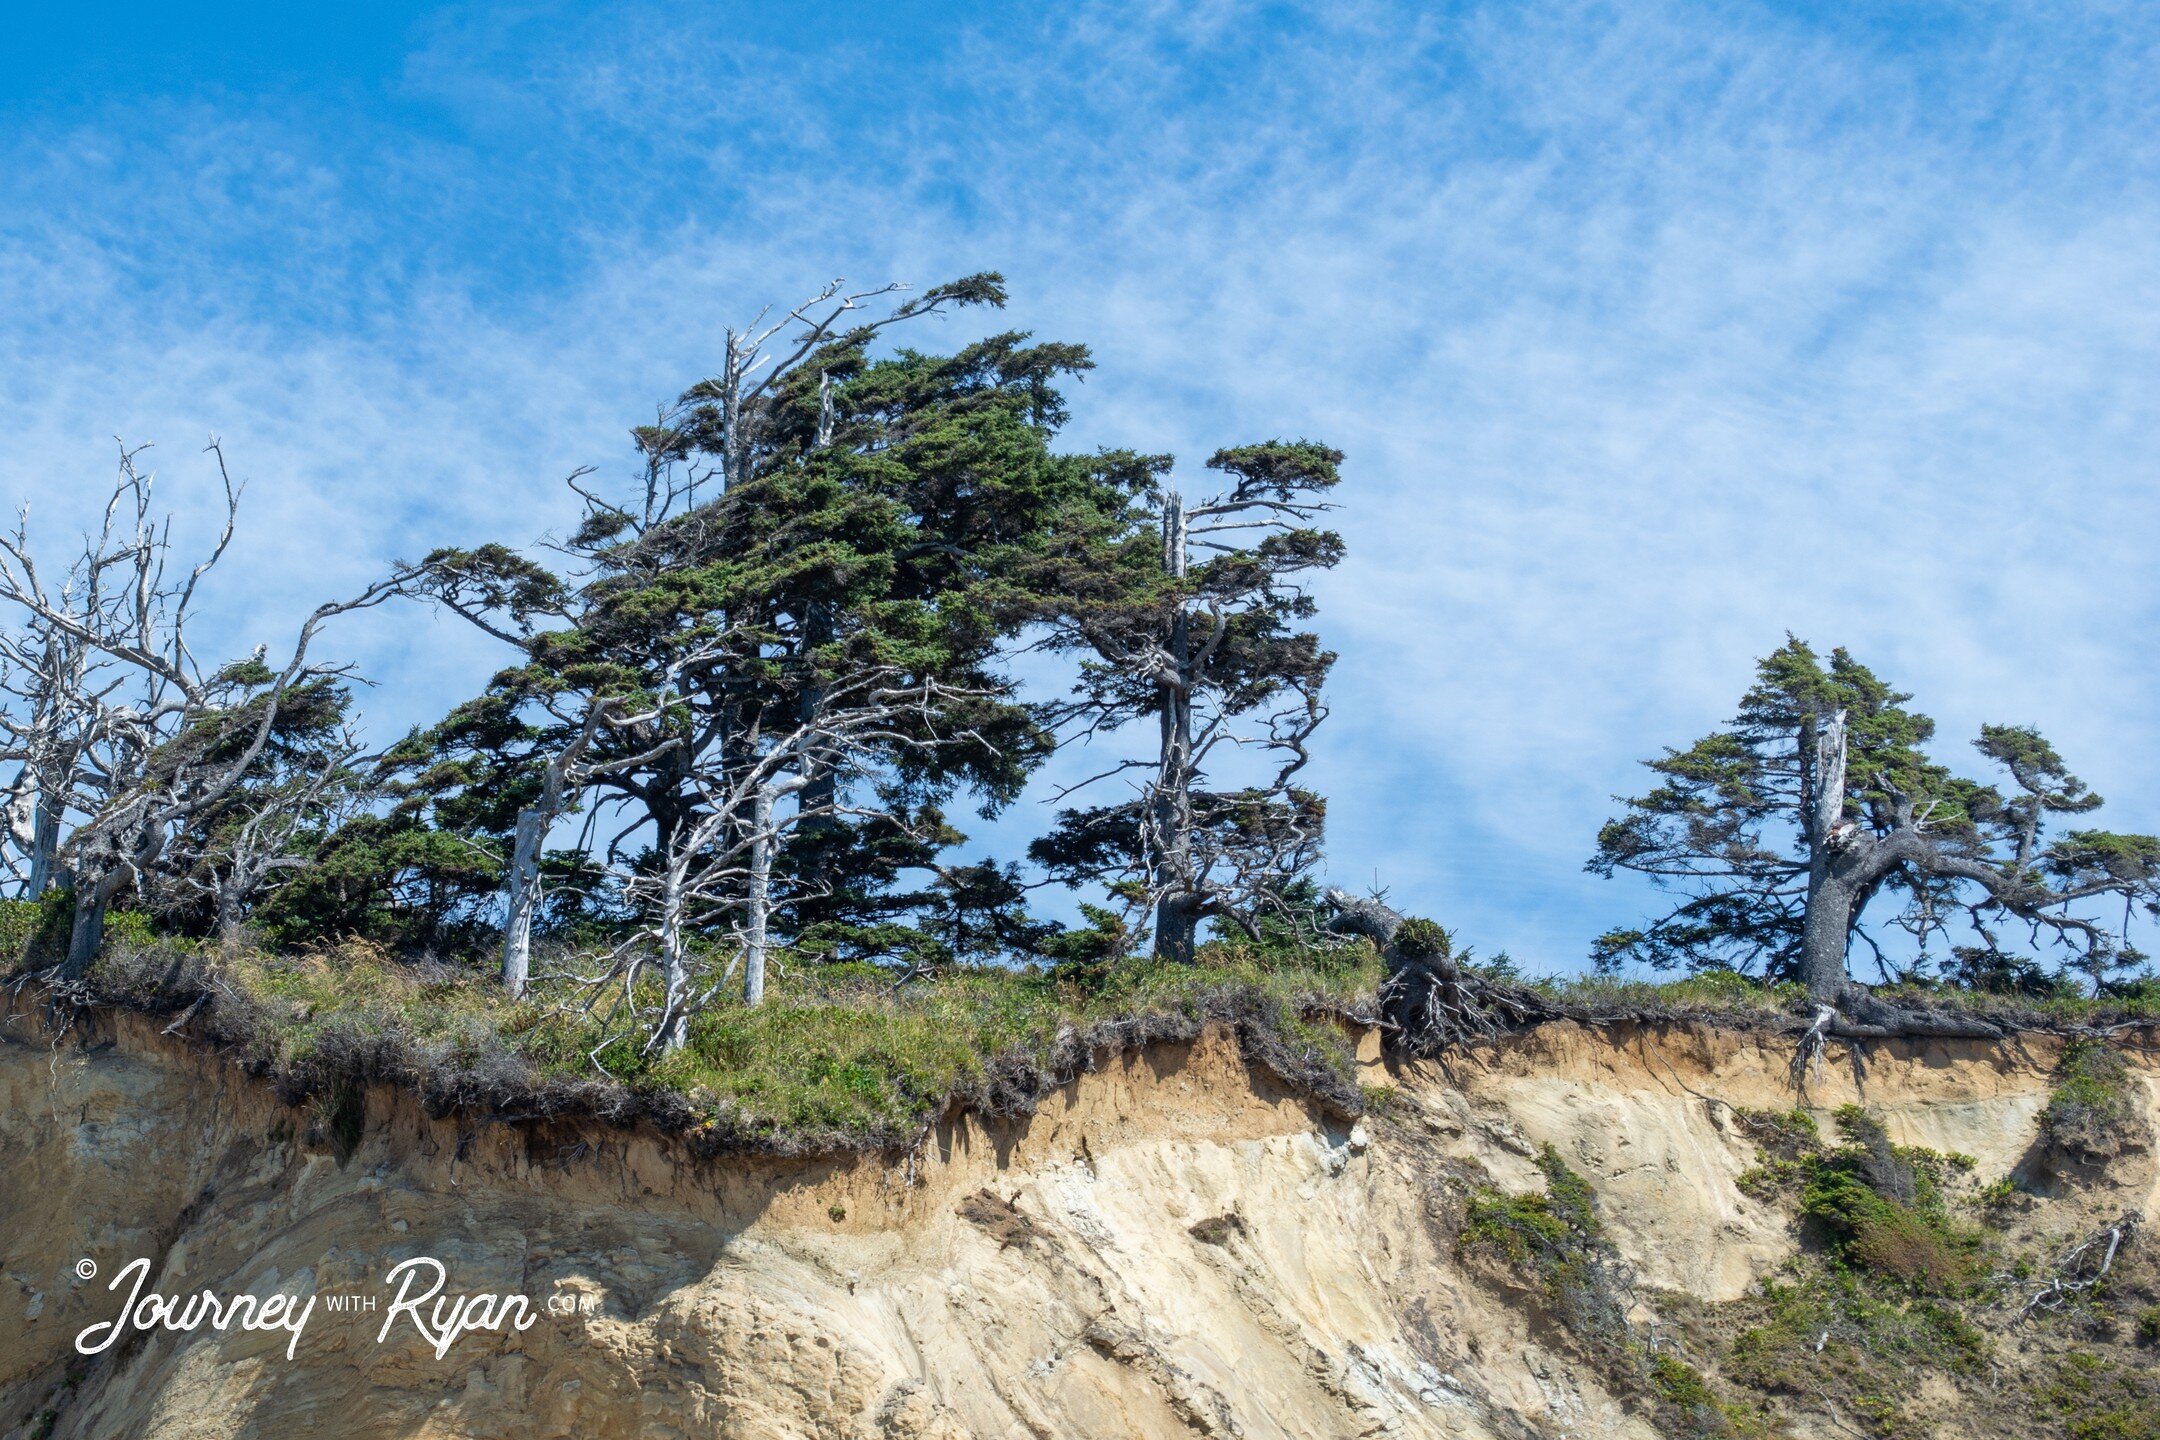 Windswept 🌲
.
The relentless coastal wind shapes the trees at its whim.
.
Shot on the Oregon Coast
.
📷 #nikond5200
.
#journeywithryan #oregon #astoria #astoriaoregon #oregoncoast #thegoonies #pacificocean #oregonbeach #pnw #pnwcoast #pnwbeach #wind